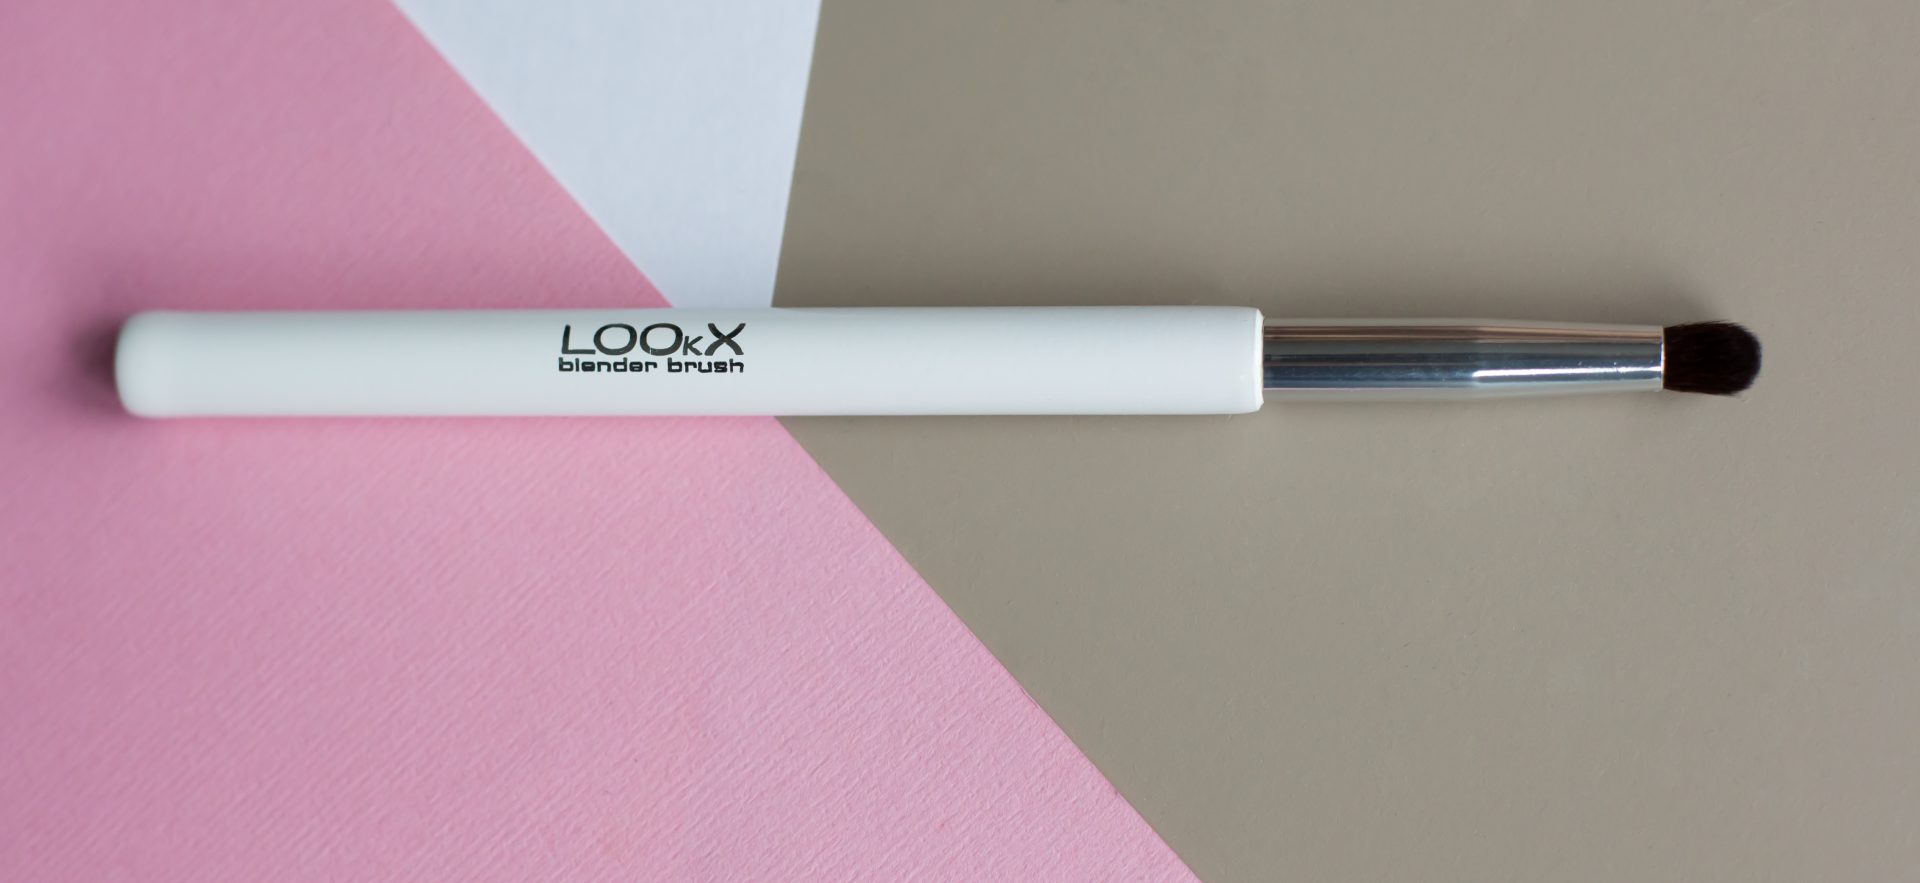 LOOkX Blending Brush - StyleTone box maart